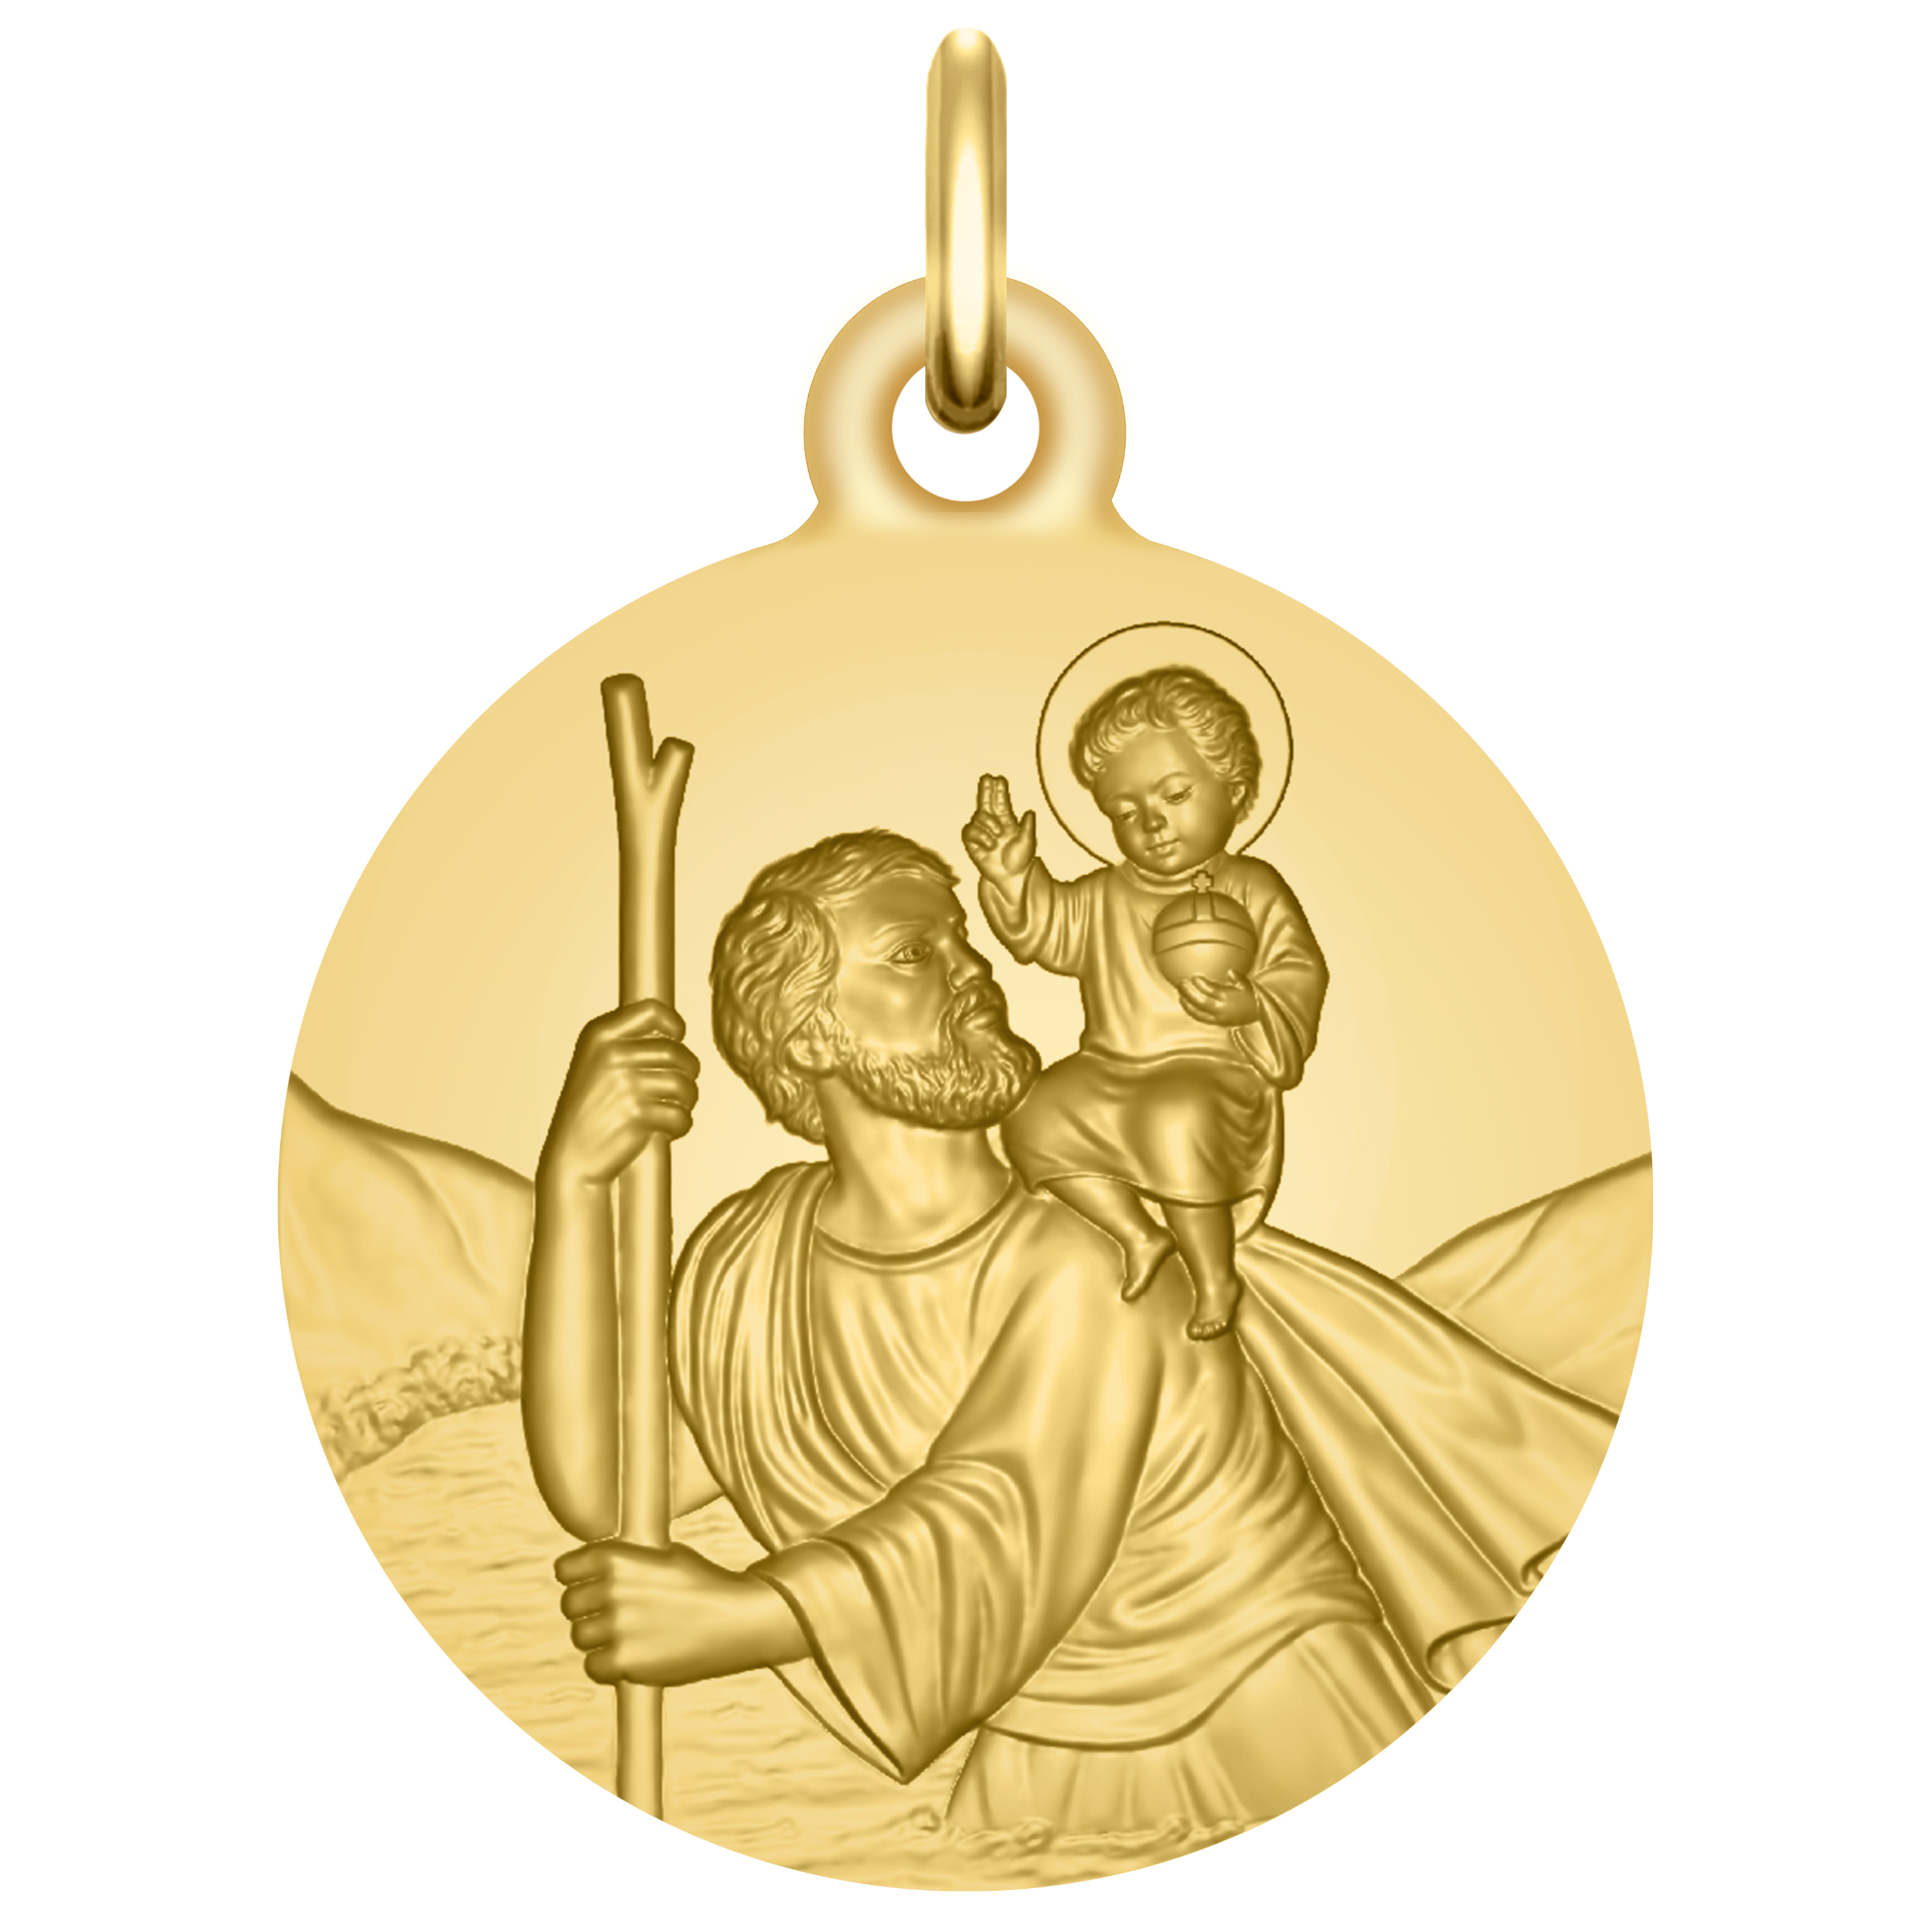 Médaille St-Christophe or 750/1000 jaune (18K) sur Bijourama